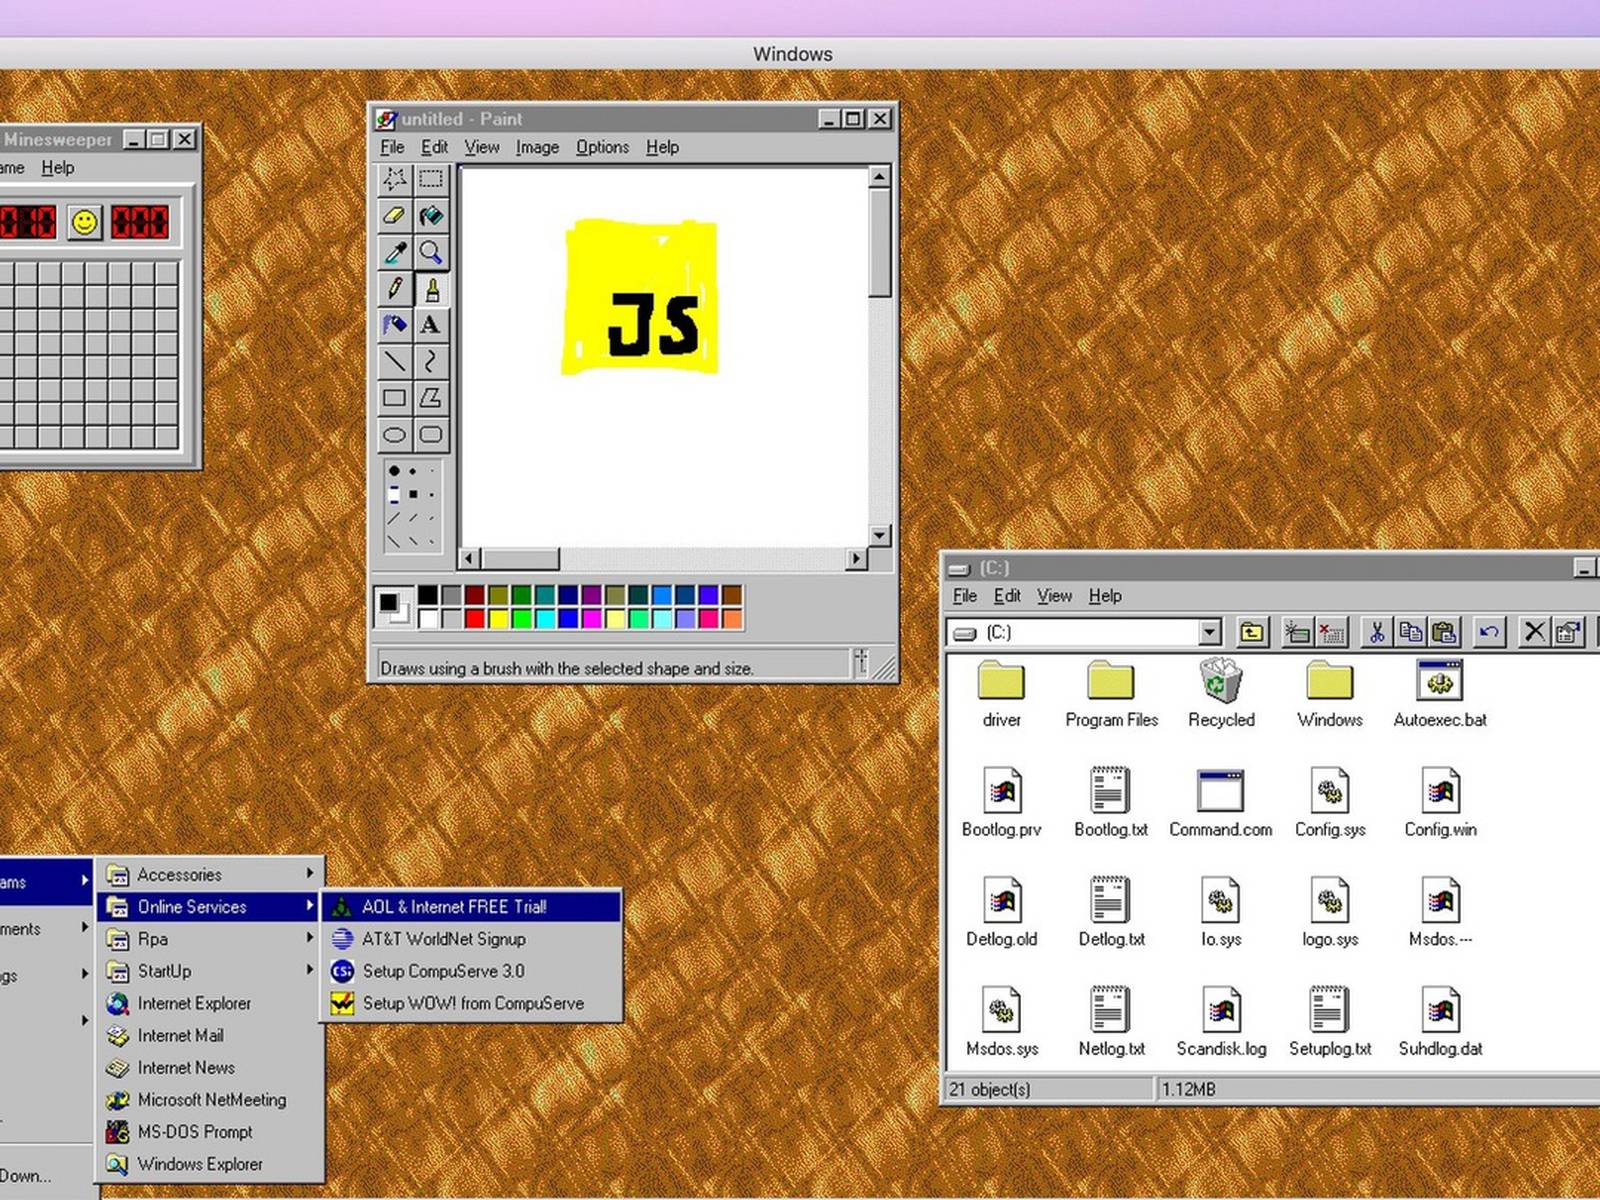 Download Windows 95